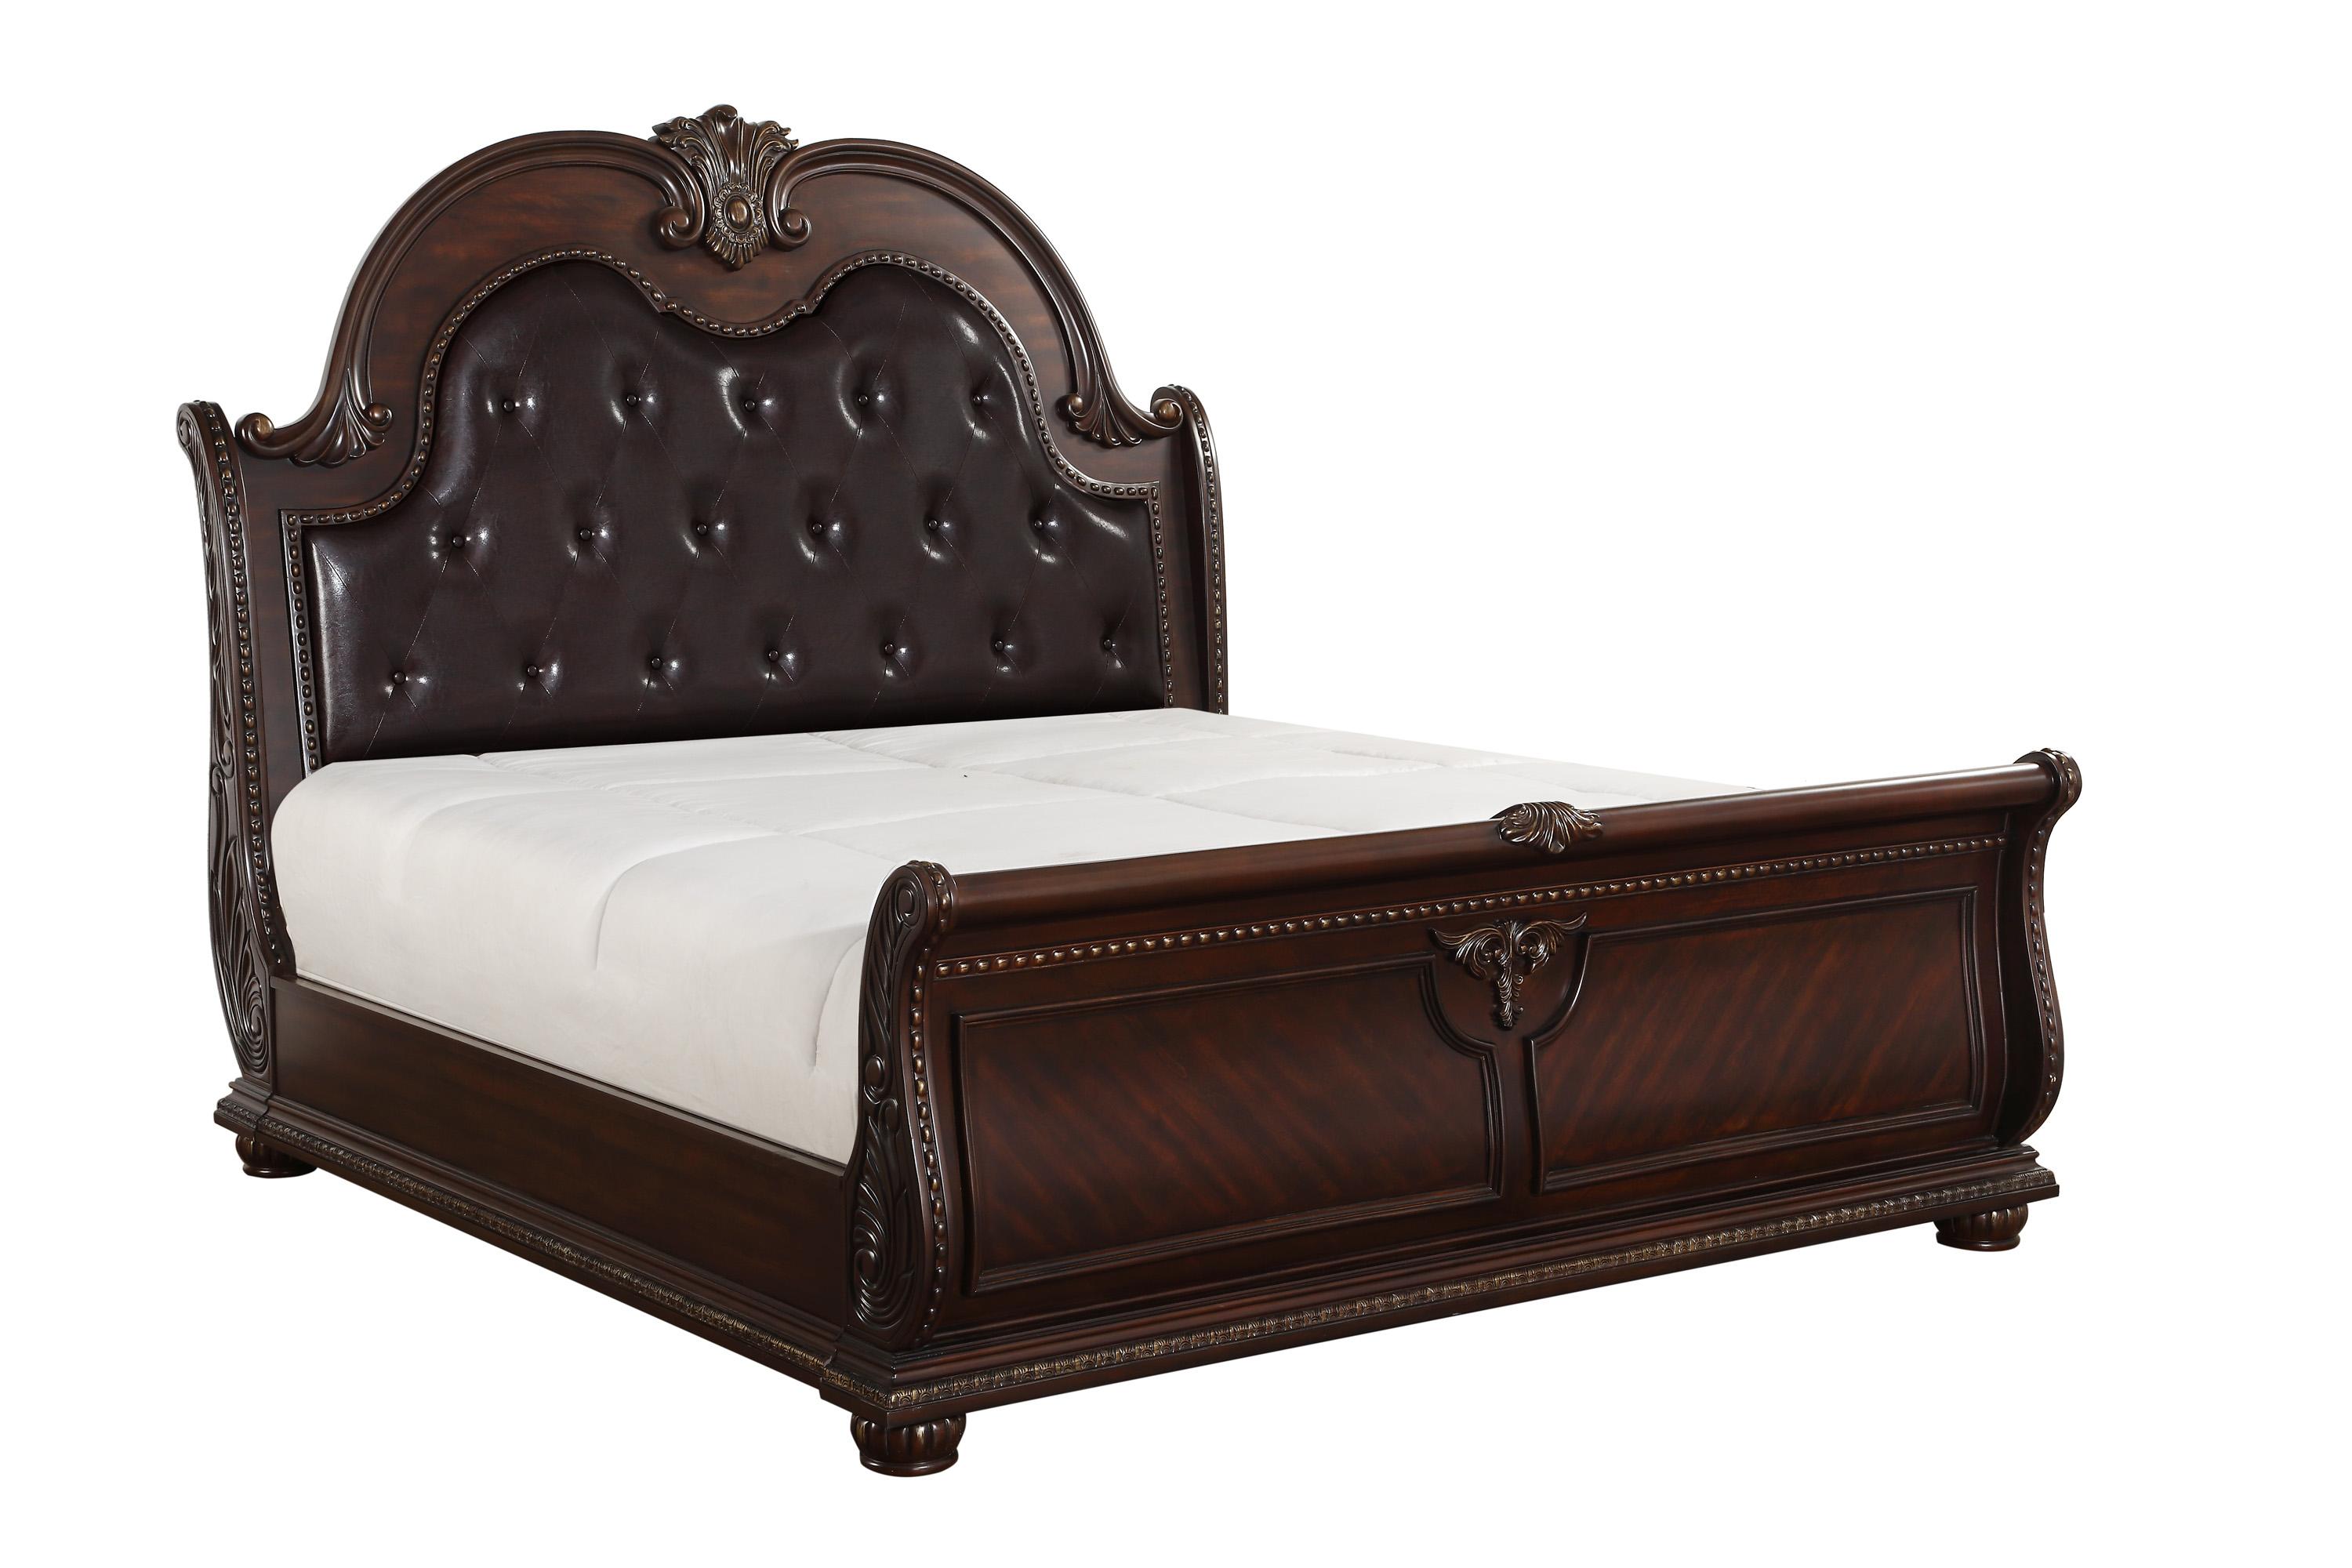 

    
Classic Dark Cherry Wood King Bedroom Set 6pcs Homelegance 1757K-1EK* Cavalier
